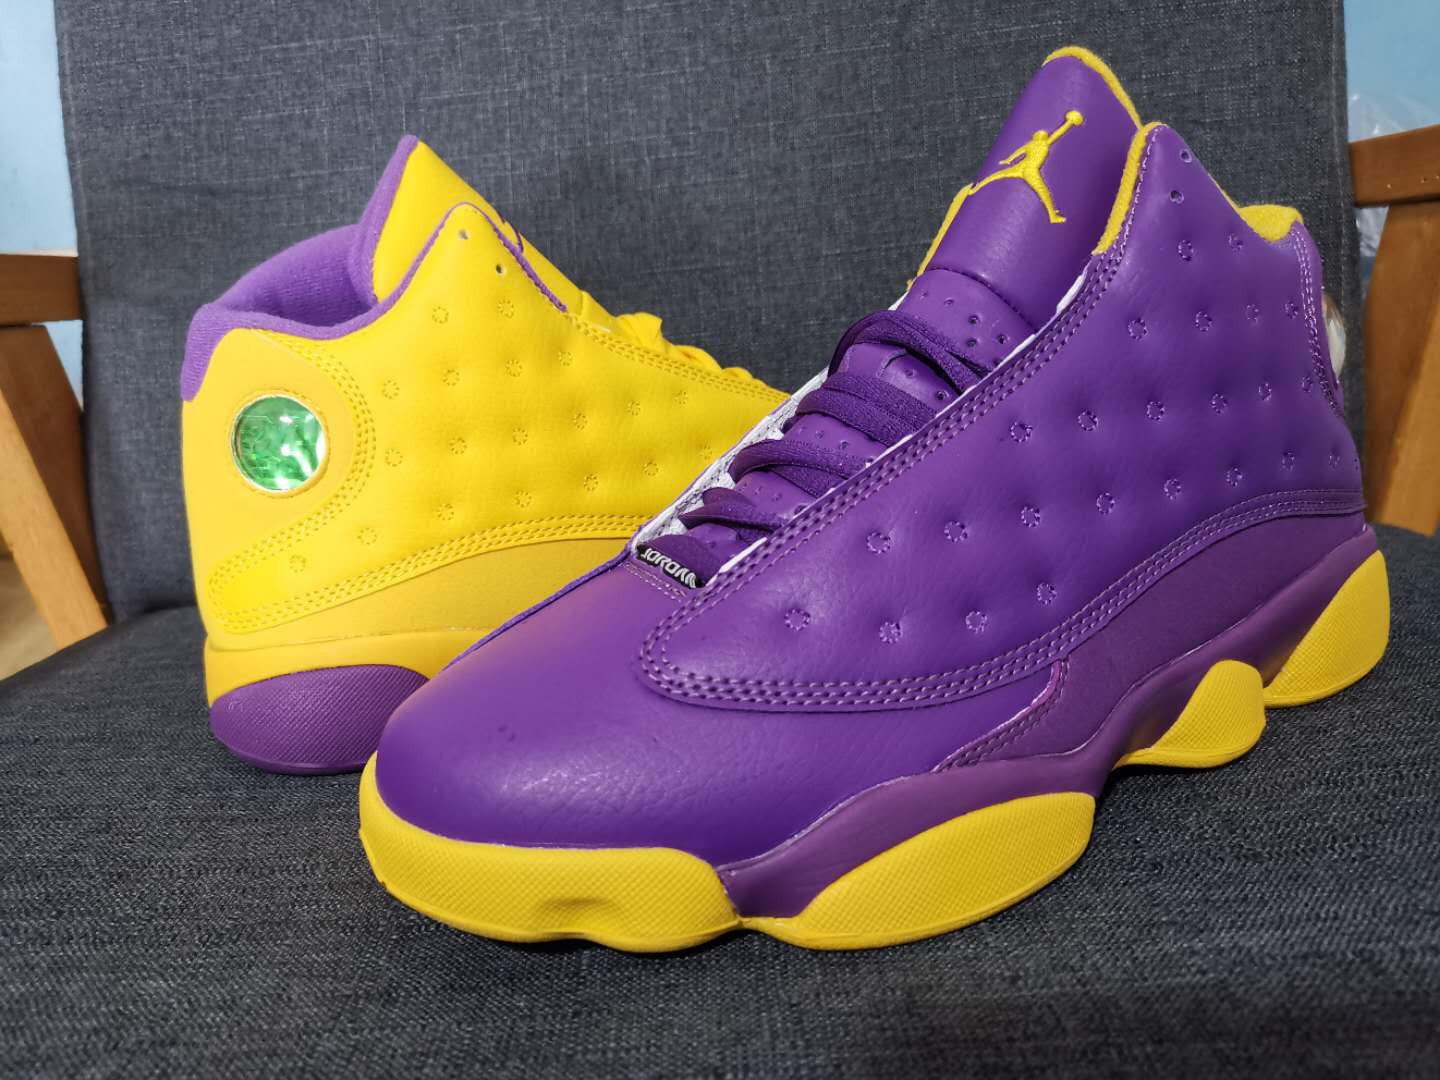 2020 Air Jordan 13 Retro Purple Yellow Shoes